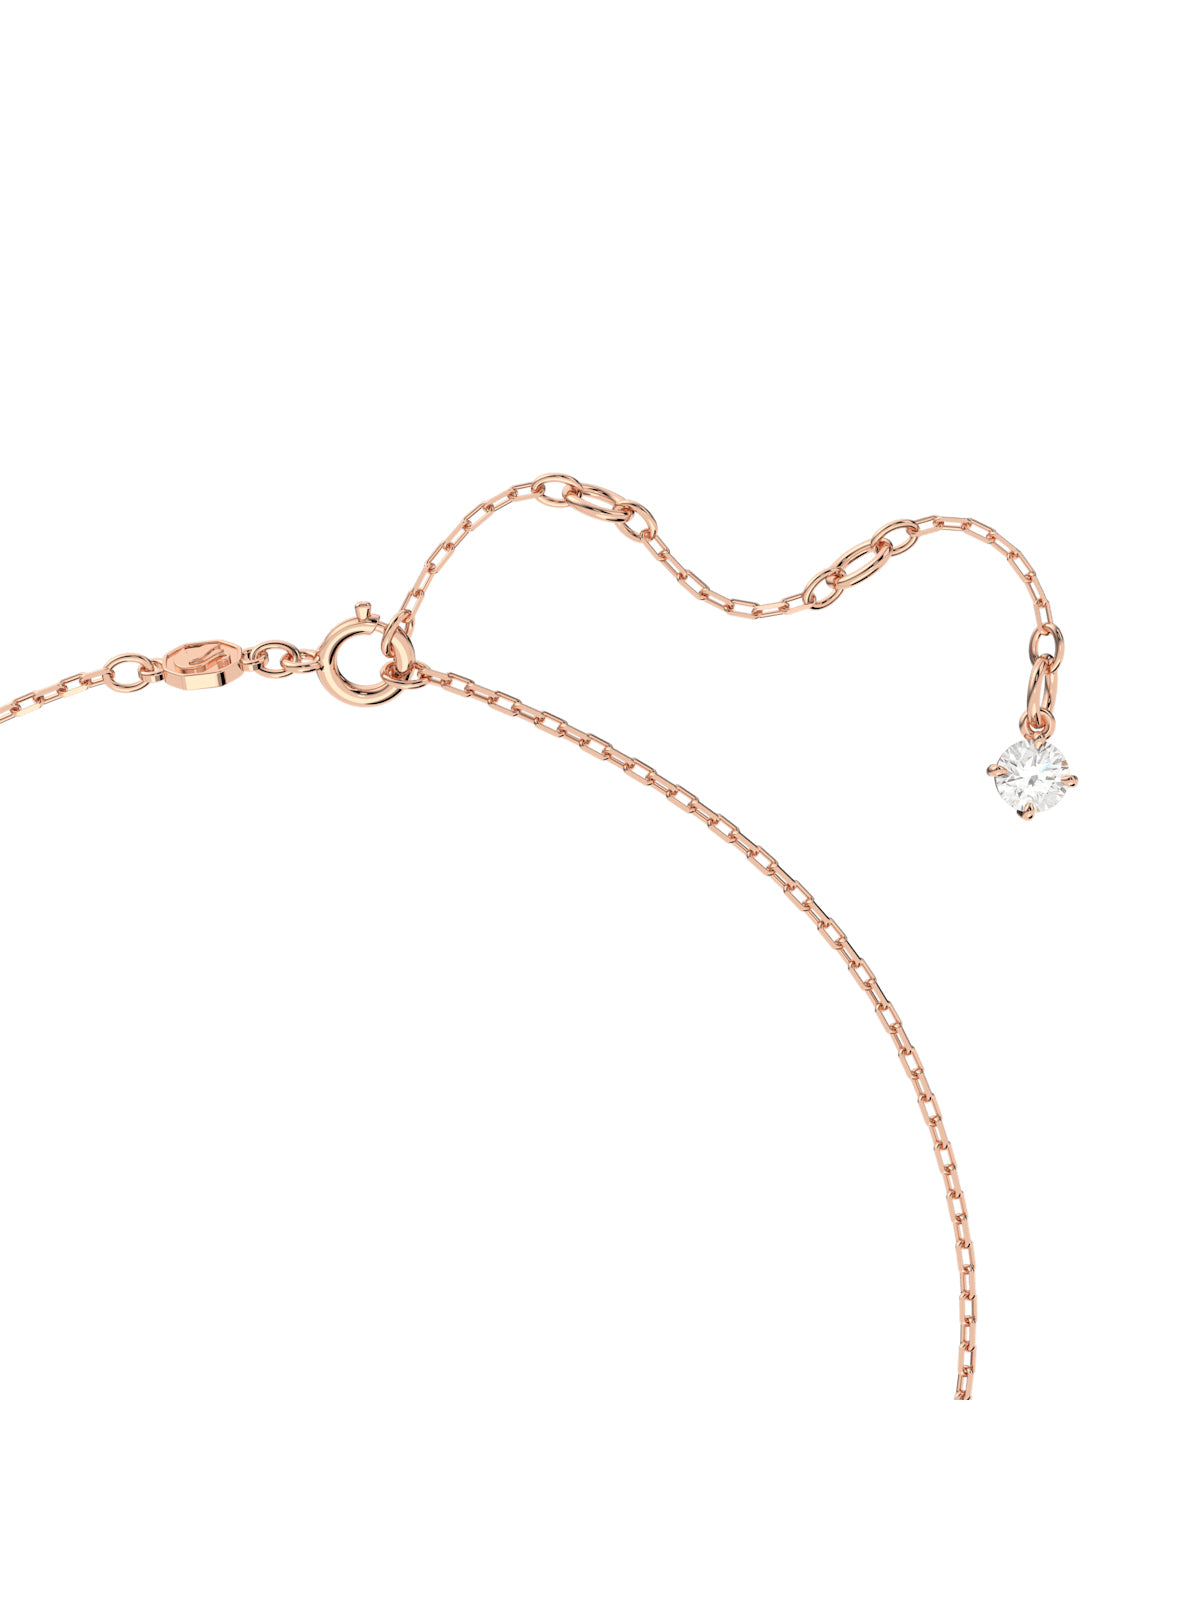 Swarovski Millenia Pink Crystal Necklace 5640291